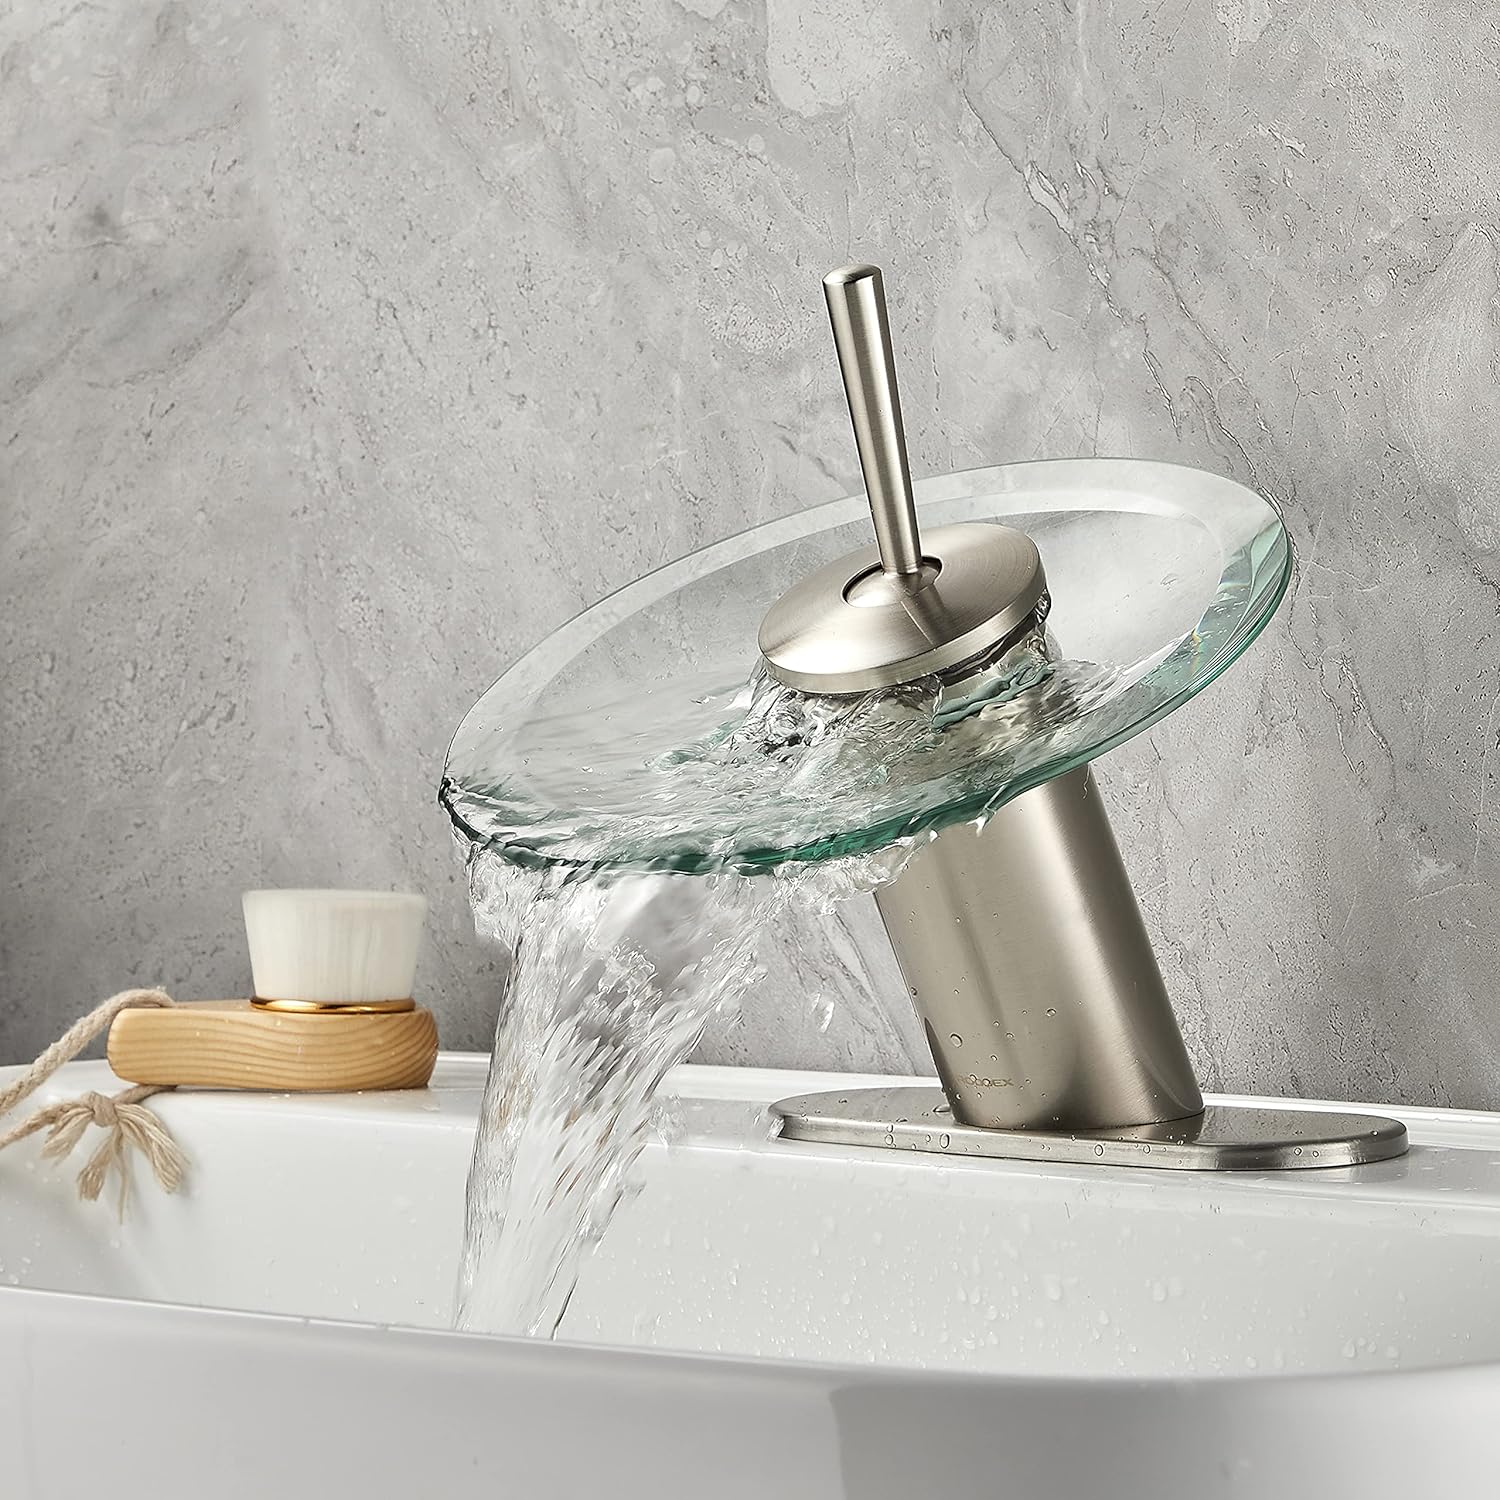 RODDEX Waterfall Bathroom Sink Faucet Solid Brass Glass One Handle Single Hole Basin Vanity Bathroom Faucet, Short,Brushed Nickel